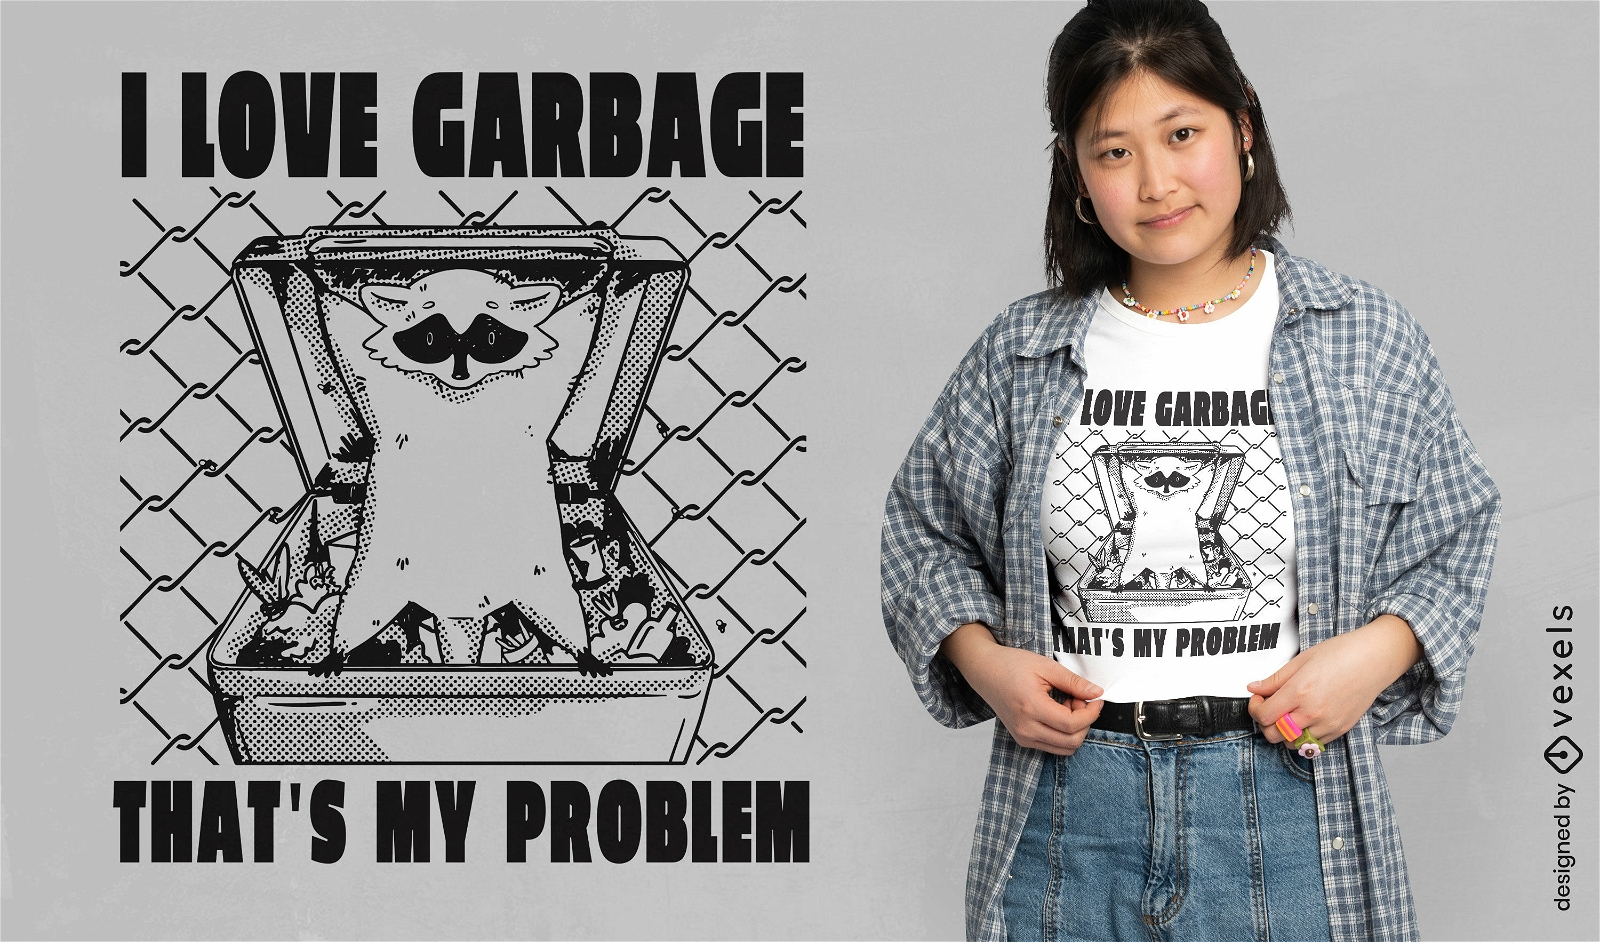 Funny garbage raccoon t-shirt design